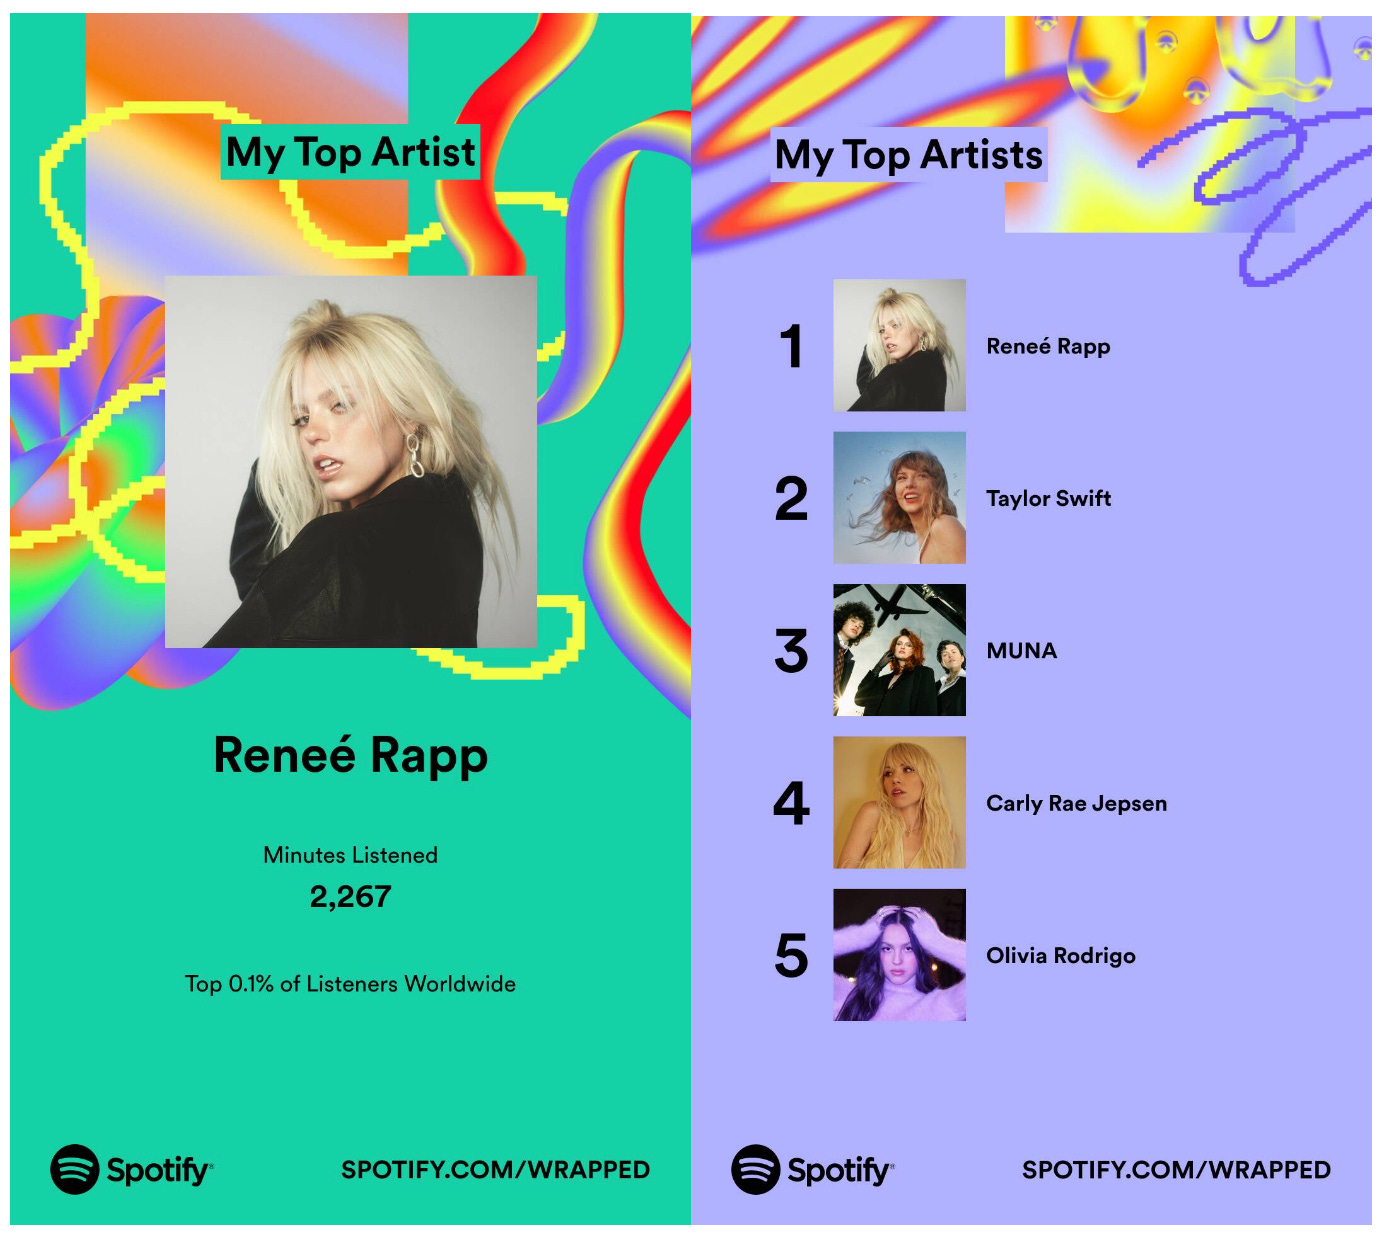 Spotify Wrapped Screenshots: 1) My Top Artist Reneé Rapp Minutes Listened 2,267 Top 0.1% of Listeners My Top 5 Artists 1. Reneé Rapp 2. Taylor Swift 3. MUNA 4. Carly Rae Jepsen 5. Olivia Rodrigo